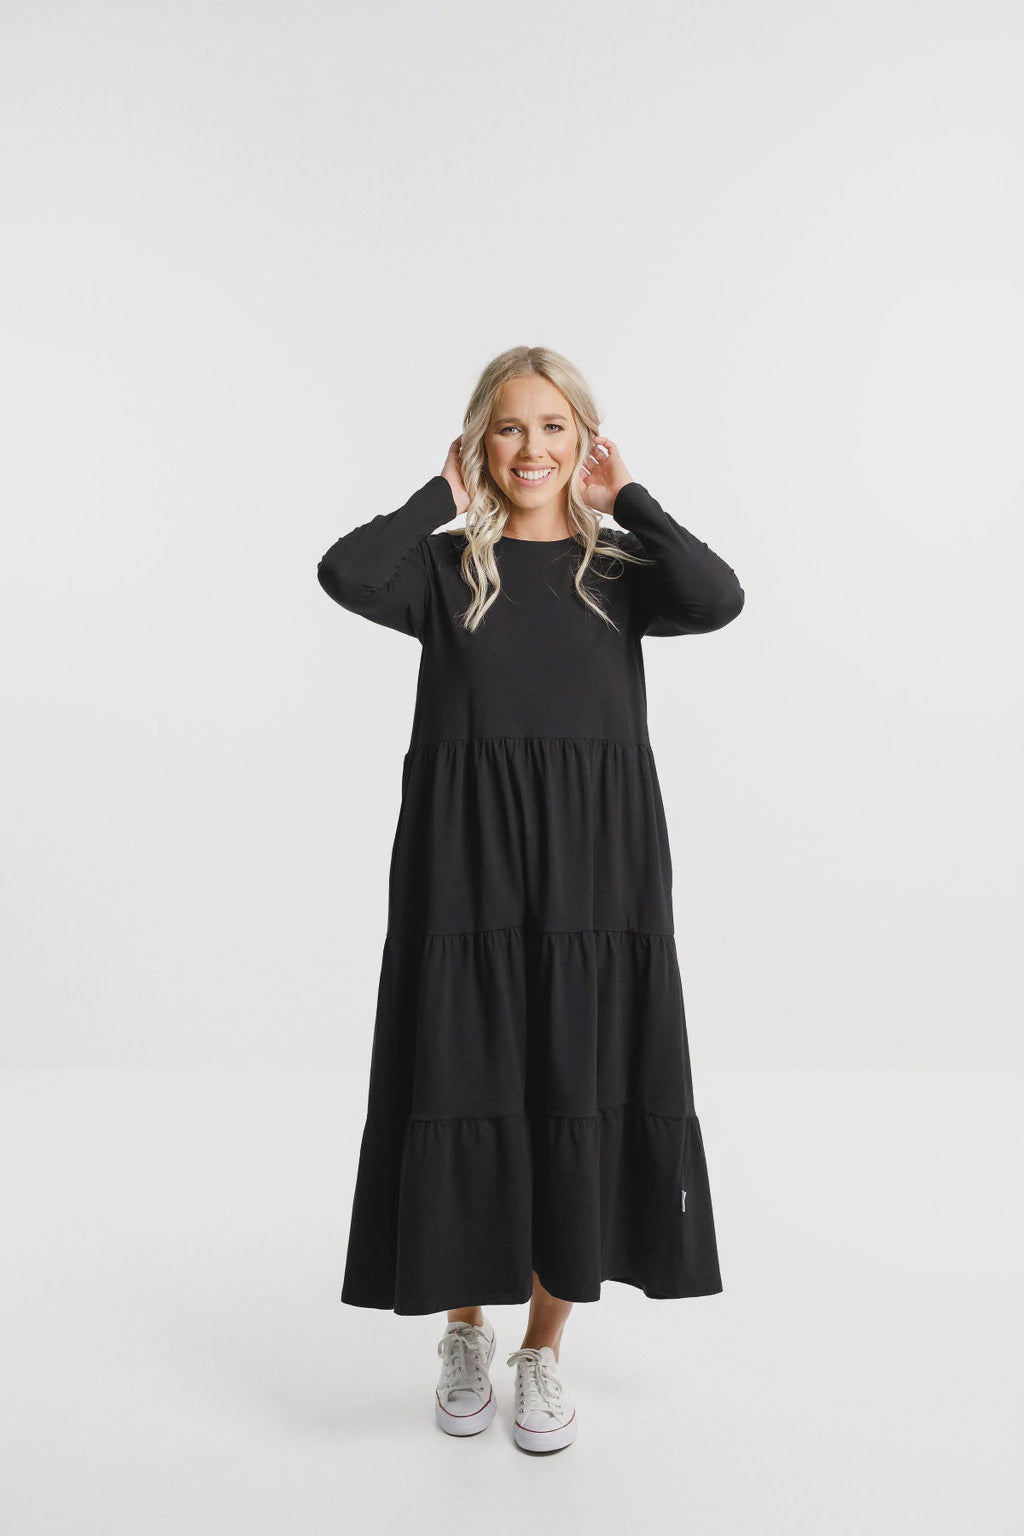 Home-Lee Long Sleeve Kendall Dress Black